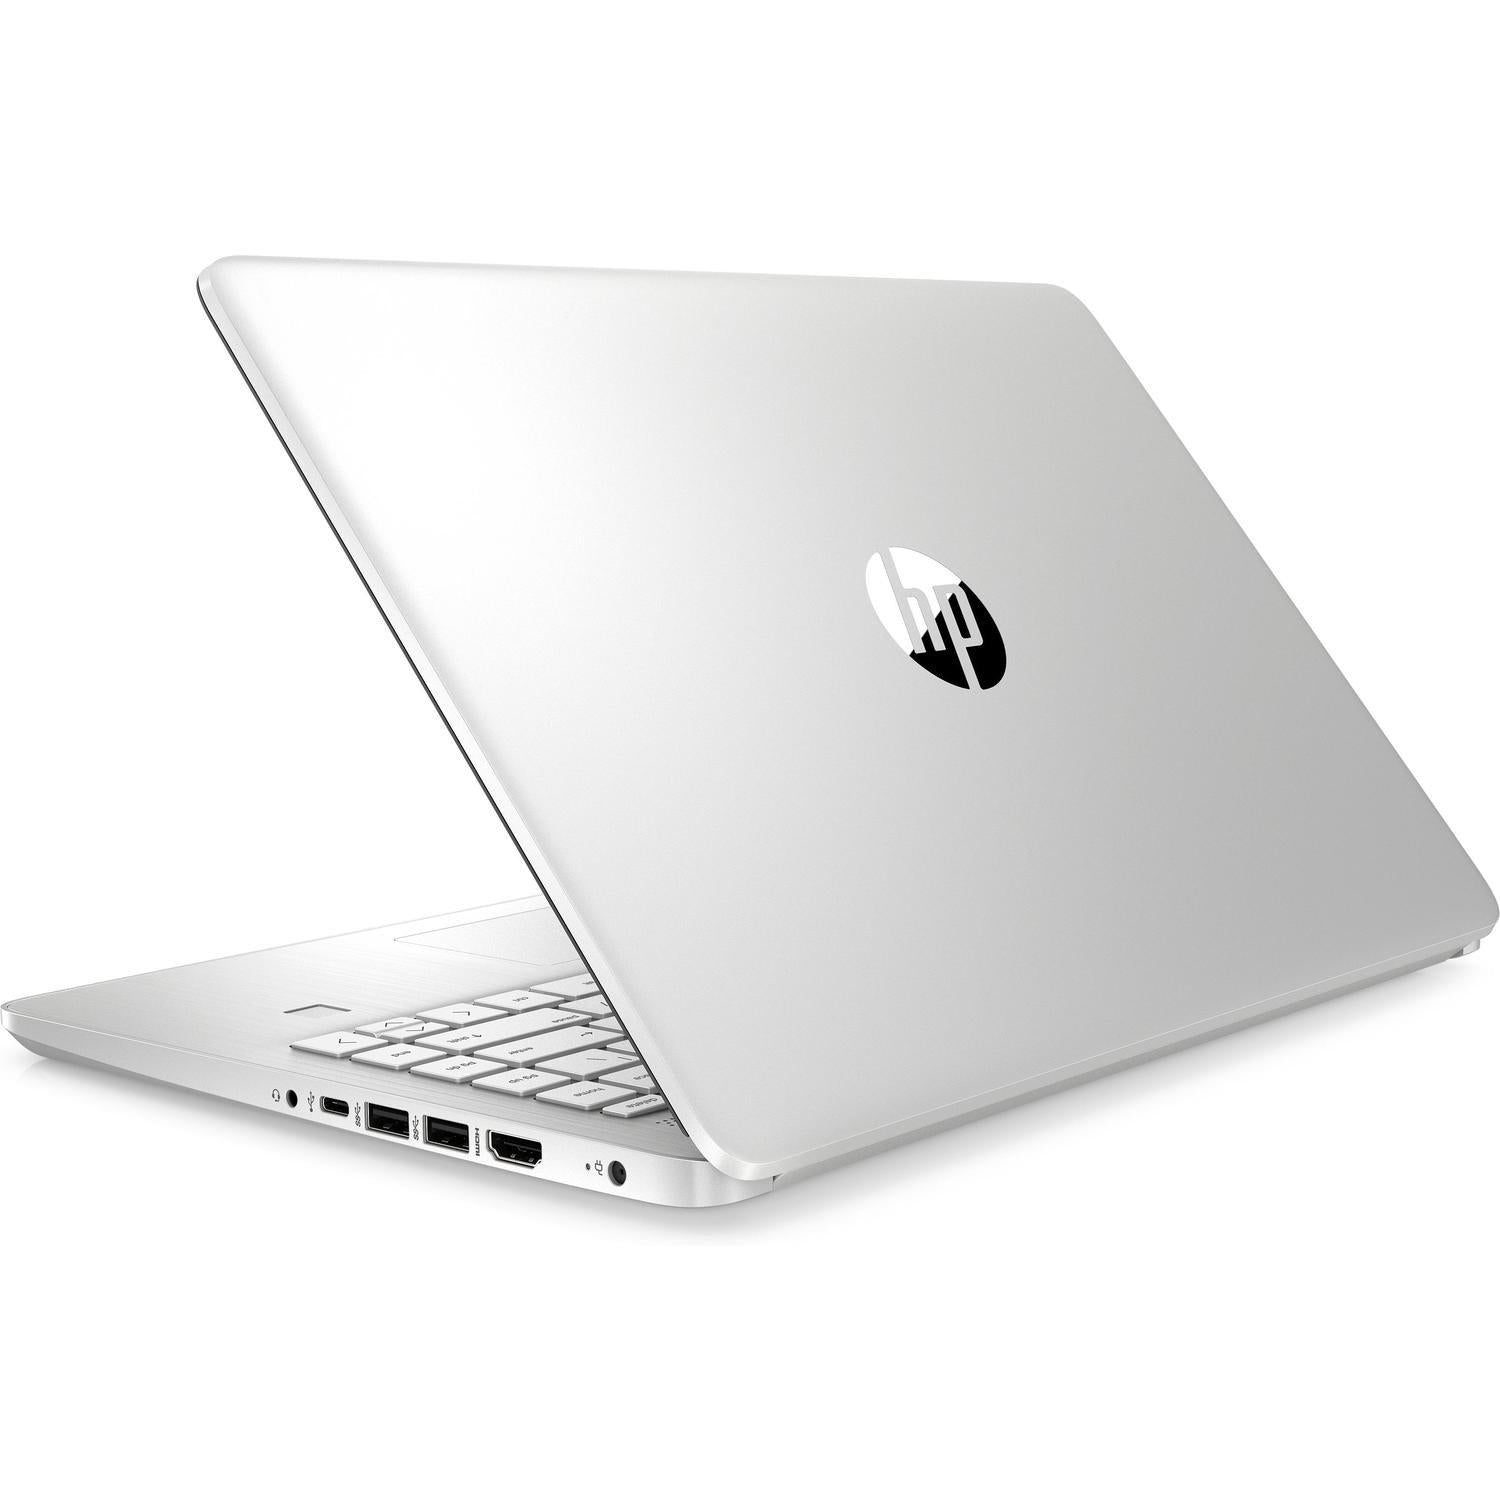 HP 14s-dq0003na Laptop, Intel Core i3 Processor, 8GB RAM, 128GB SSD, 14" Full HD, Natural Silver 7DM06EA#ABU